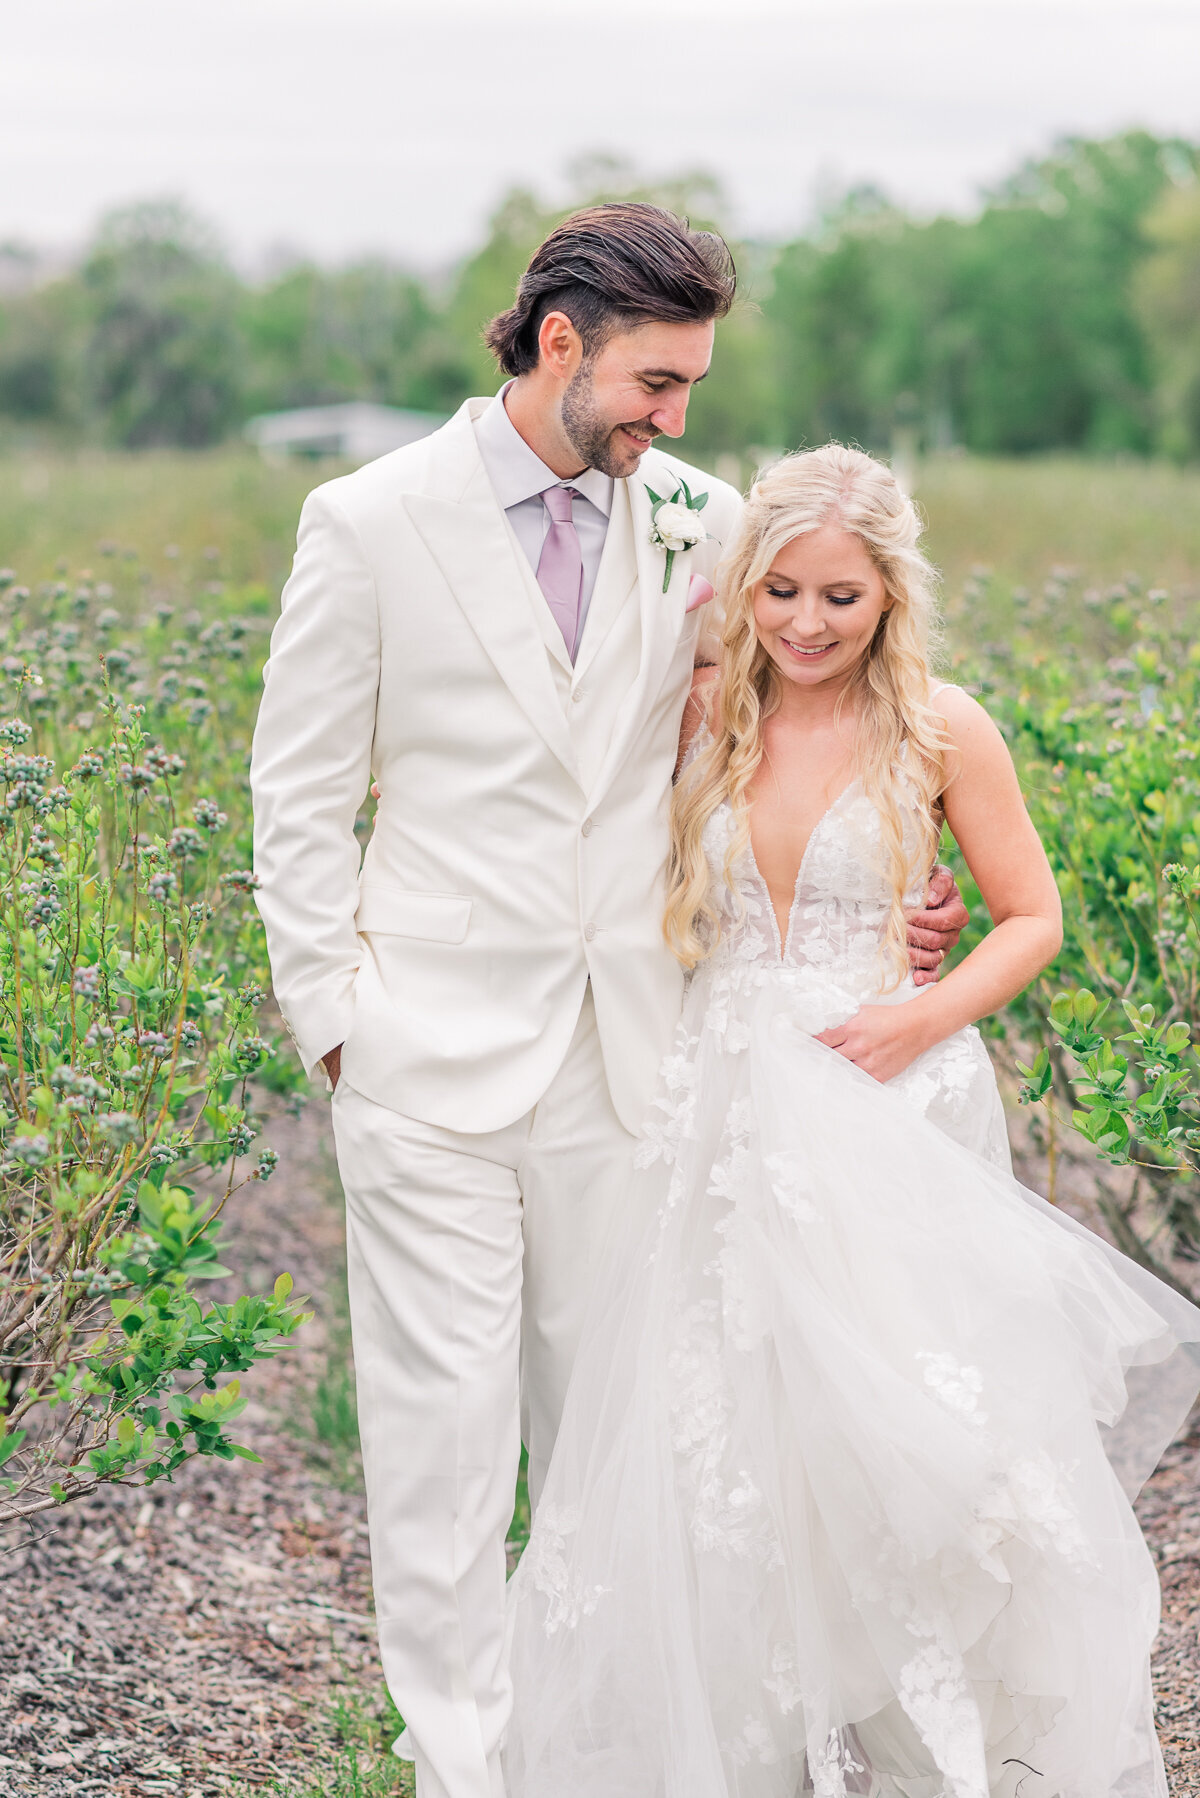 Jason & Taylor Ever After Blueberry Farm Wedding | Lisa Marshall Photography